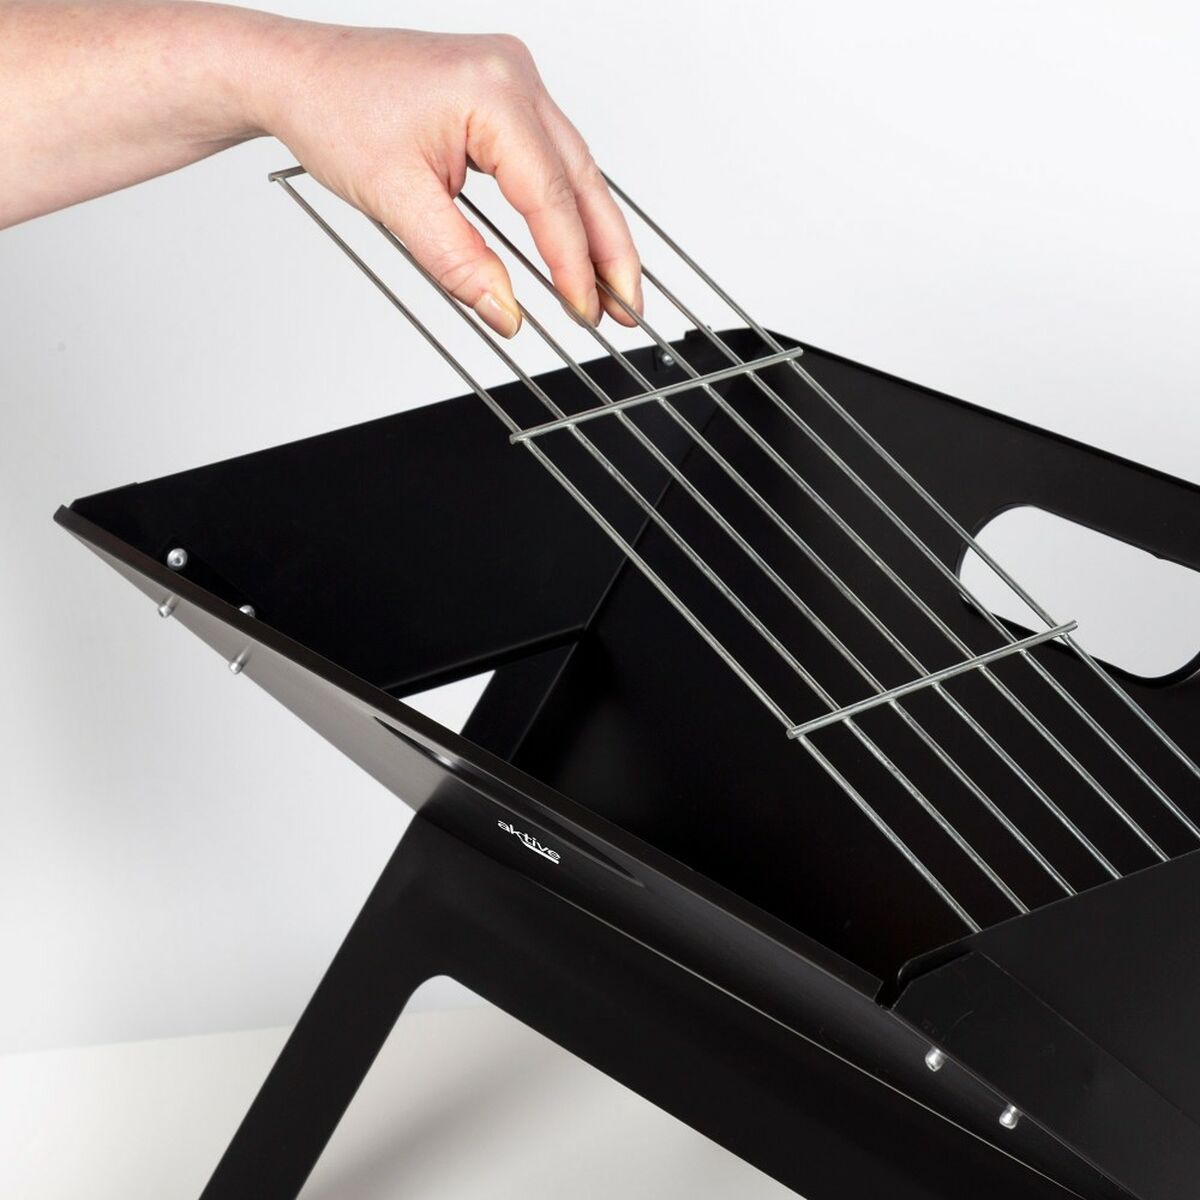 Barbecue Portable Aktive Black 45 x 30 x 29 cm Steel Iron